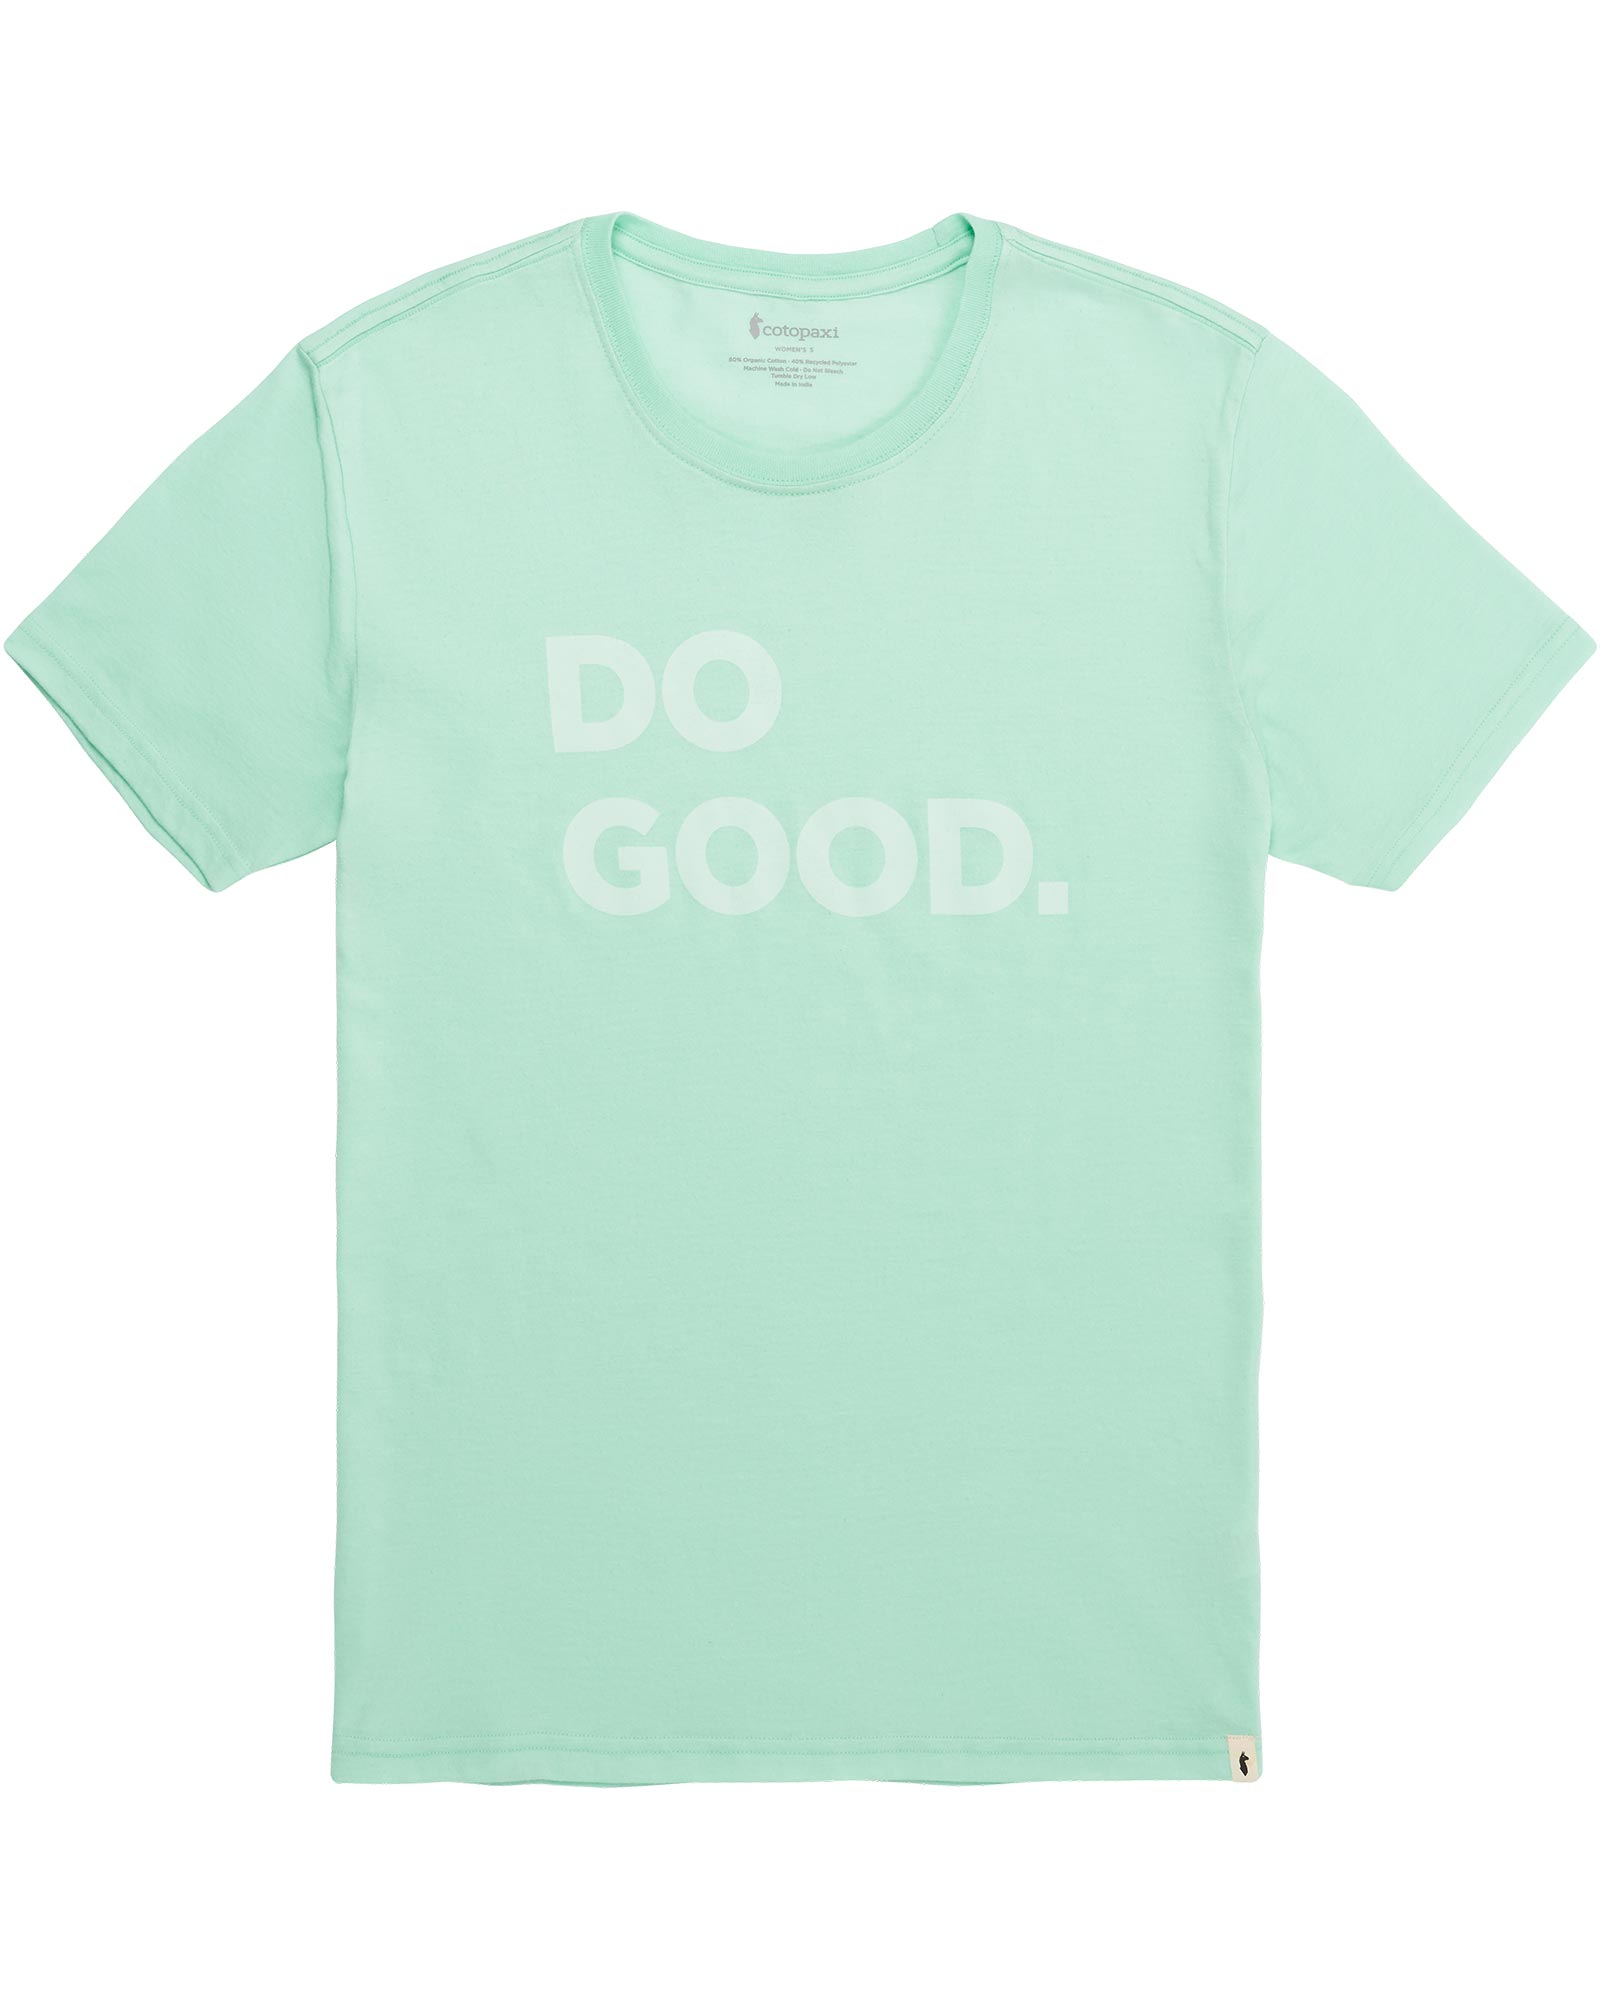 Cotopaxi Do Good Women's T-Shirt